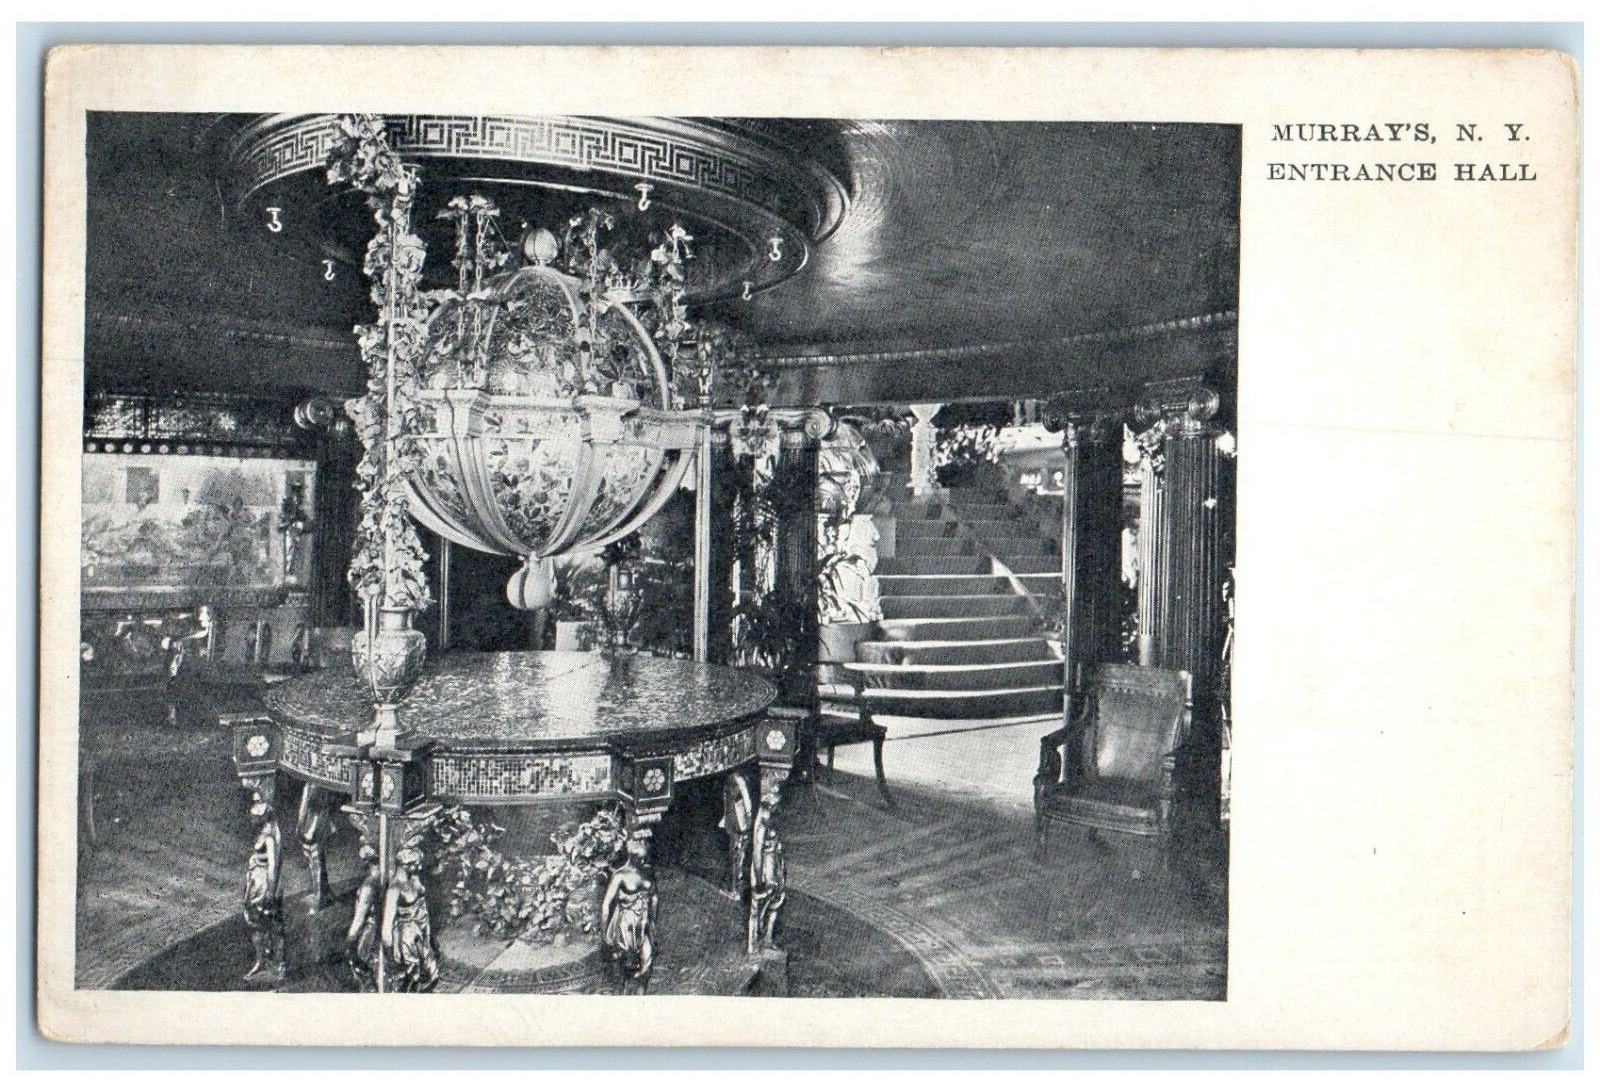 c1940 Entrance Hall Interior Building Murray's New York Vintage Antique Postcard